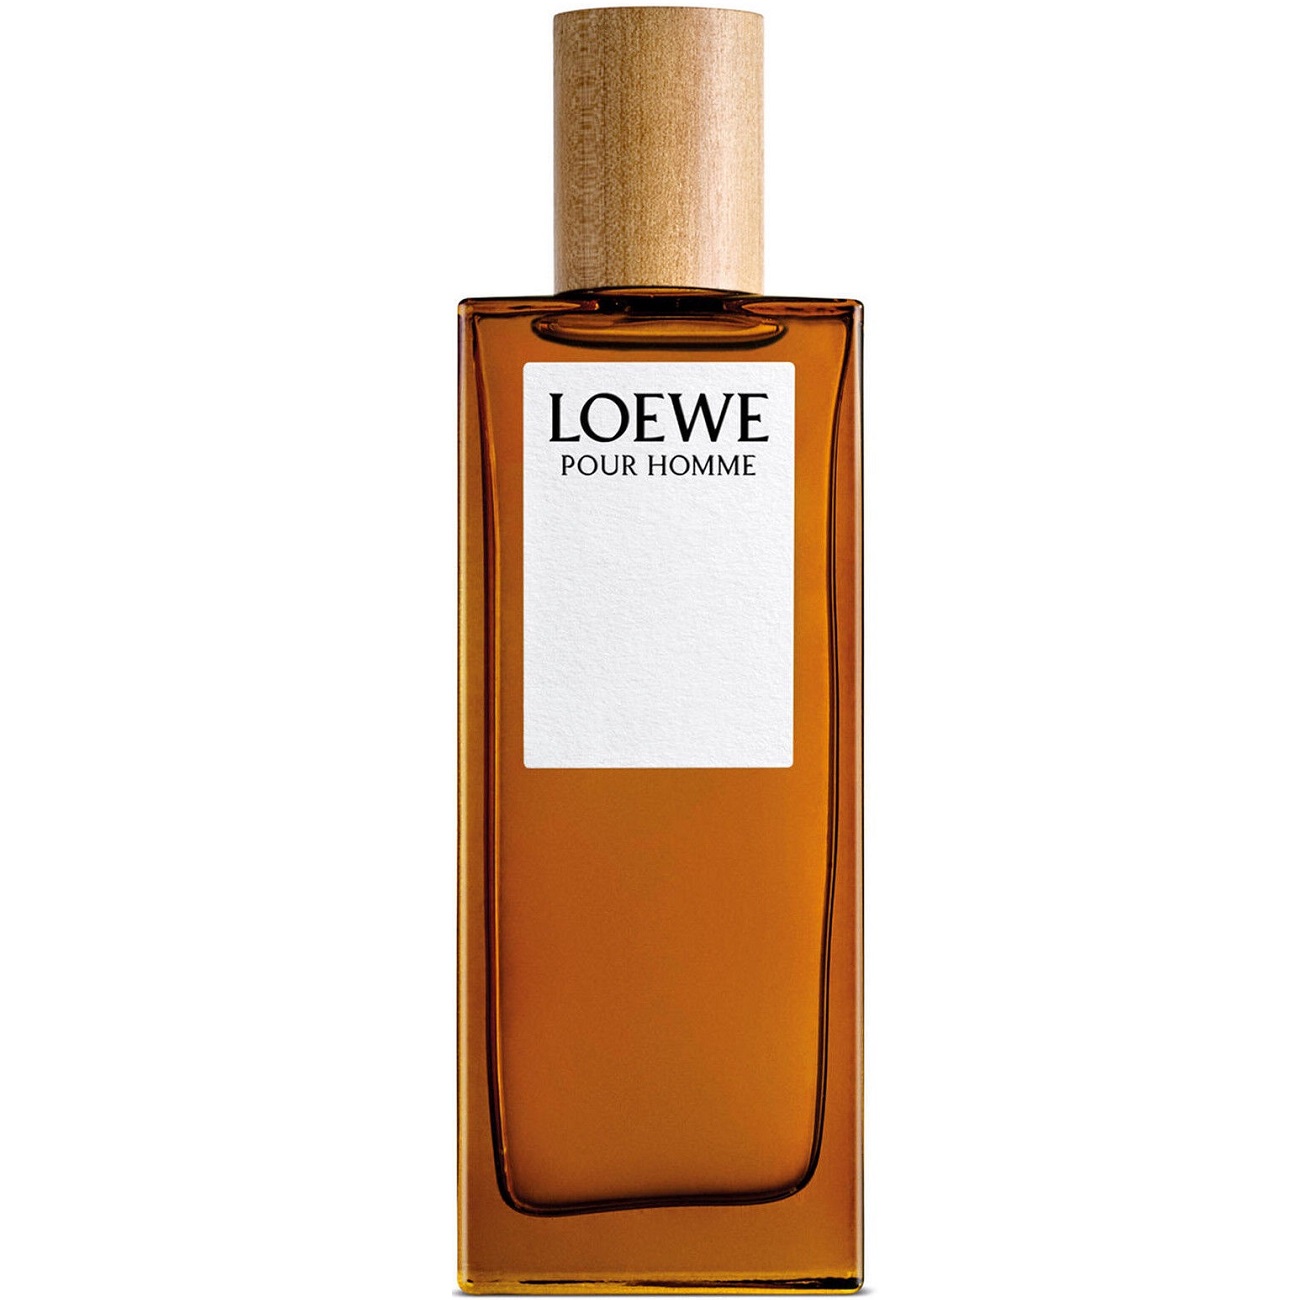 Solo loewe туалетная вода. Loewe духи Cedro. Туалетная вода Loewe "solo Loewe pour homme". Туалетная вода Loewe solo 50 мл. Solo Loewe Cedro мужские.